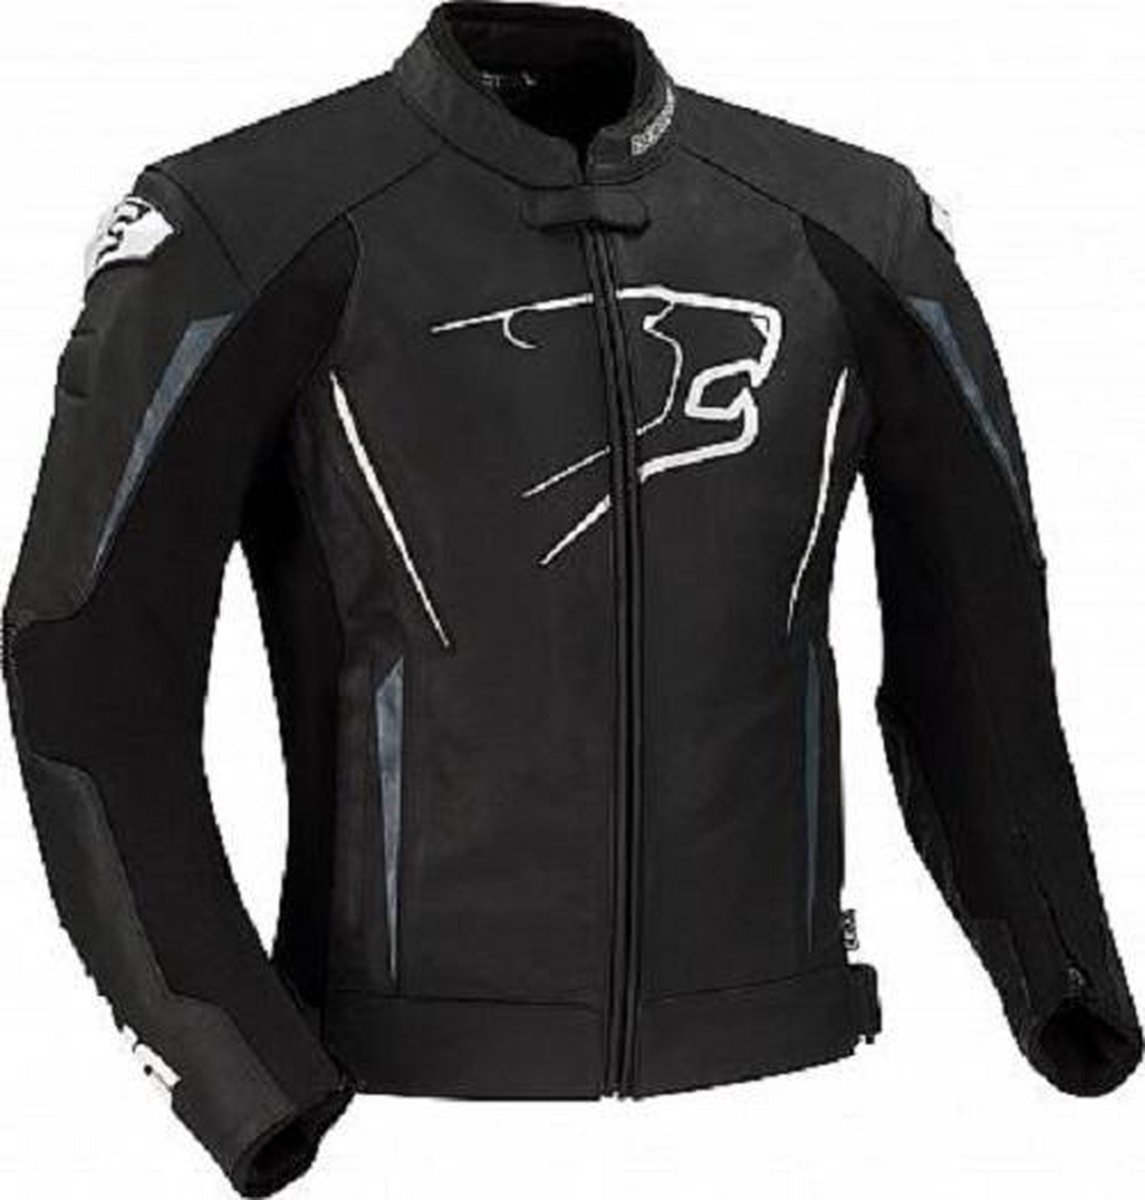 Bering Stator Black Leather Motorcycle Jacket L